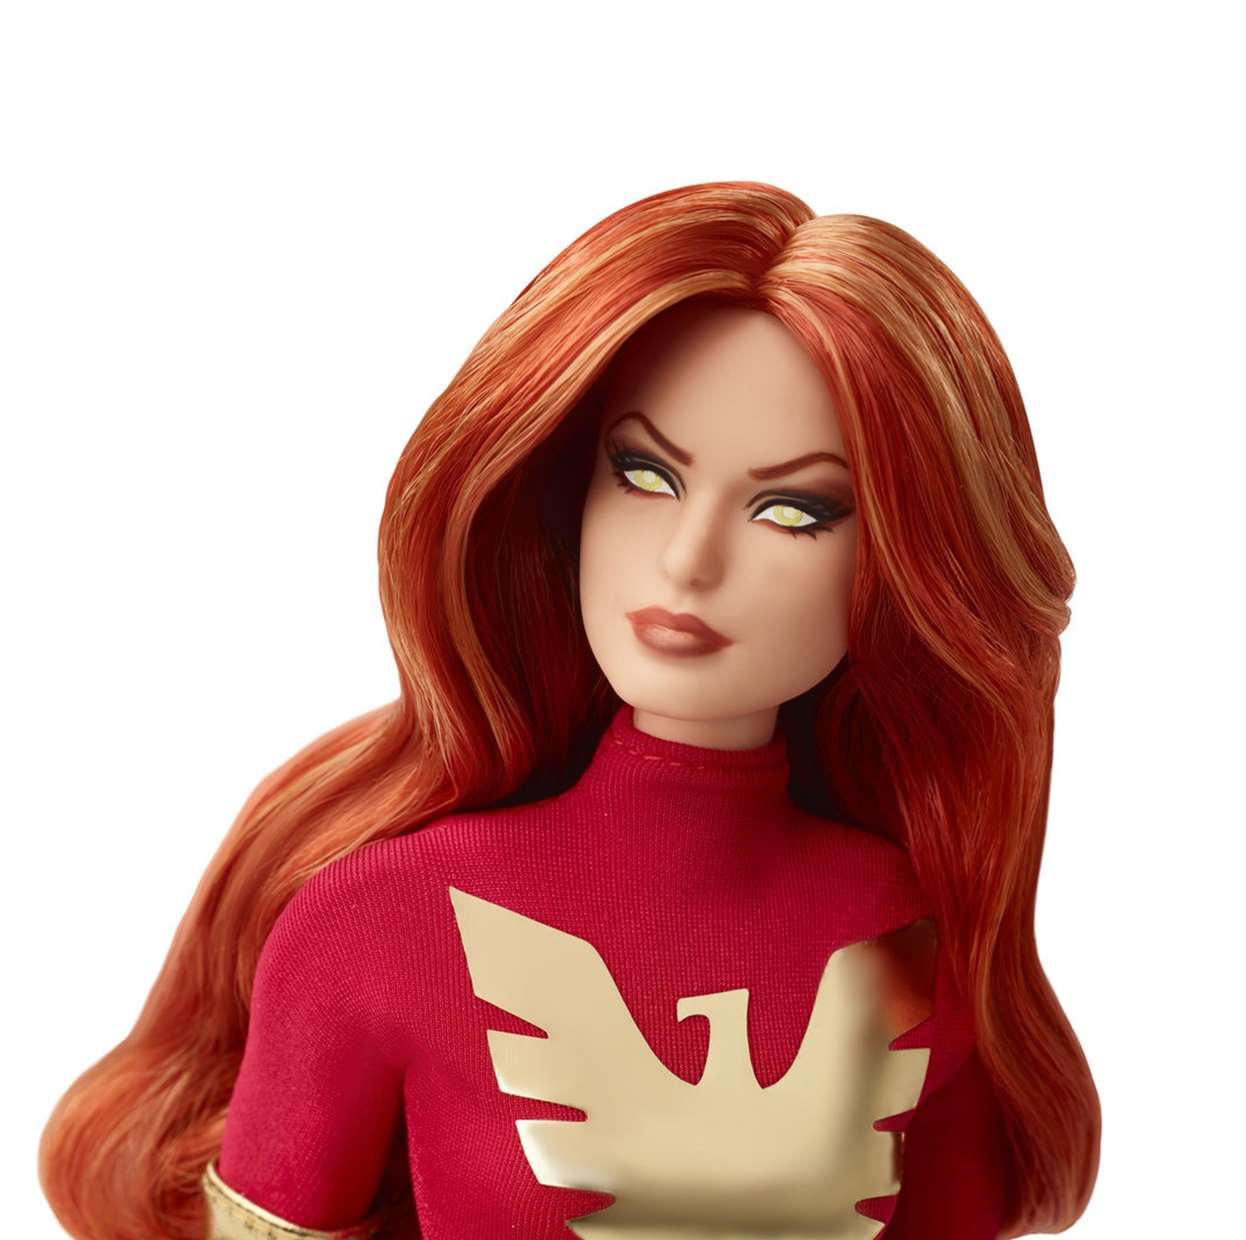 Dark Phoenix Doll Figura Barbie Signature Marvel 80th Years